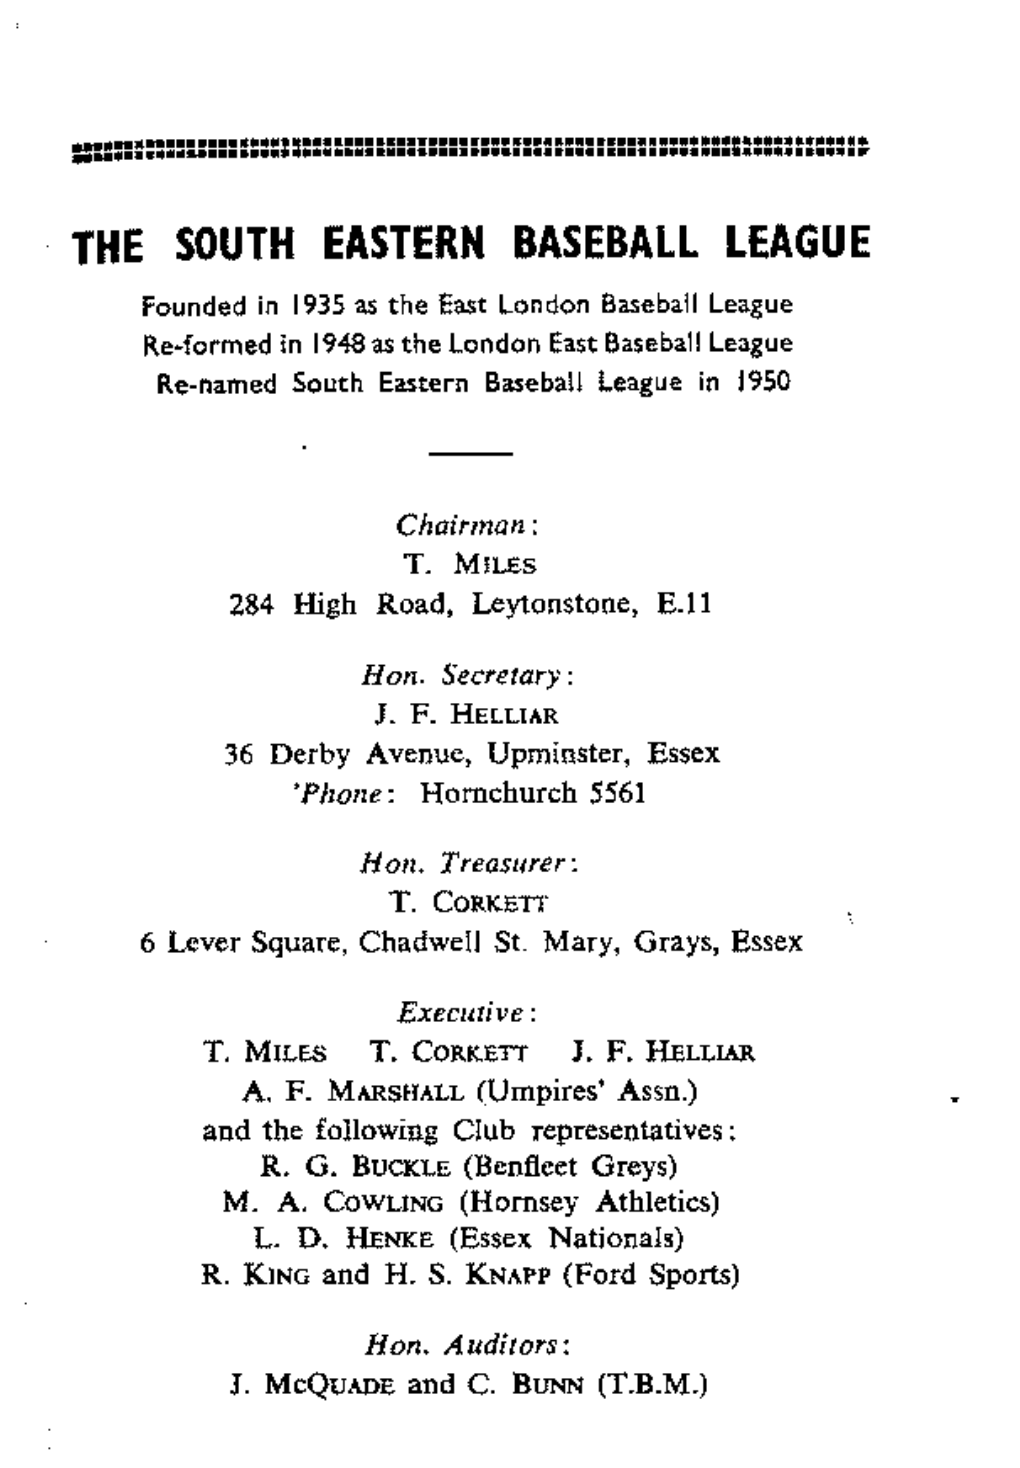 The South Eastern Baseball League